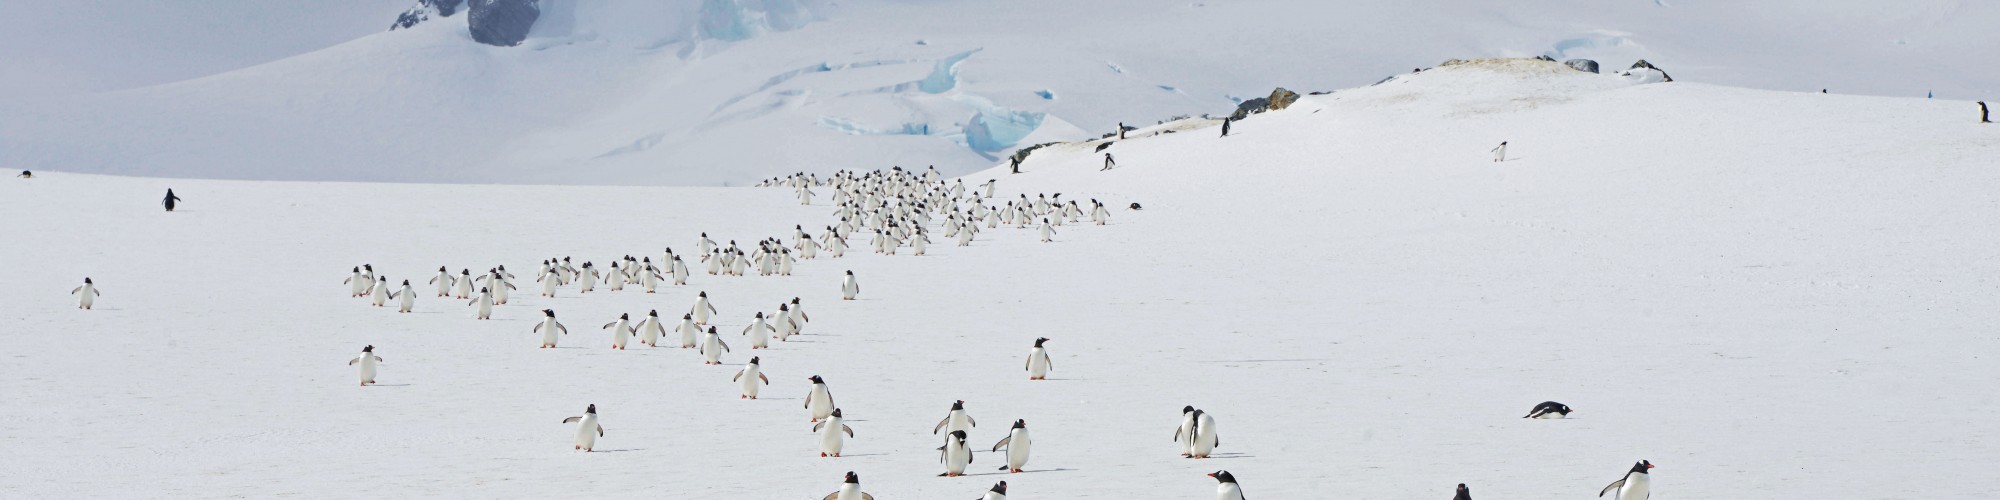 Antarctica - Peninsula - Hebridean Sky - Penguins